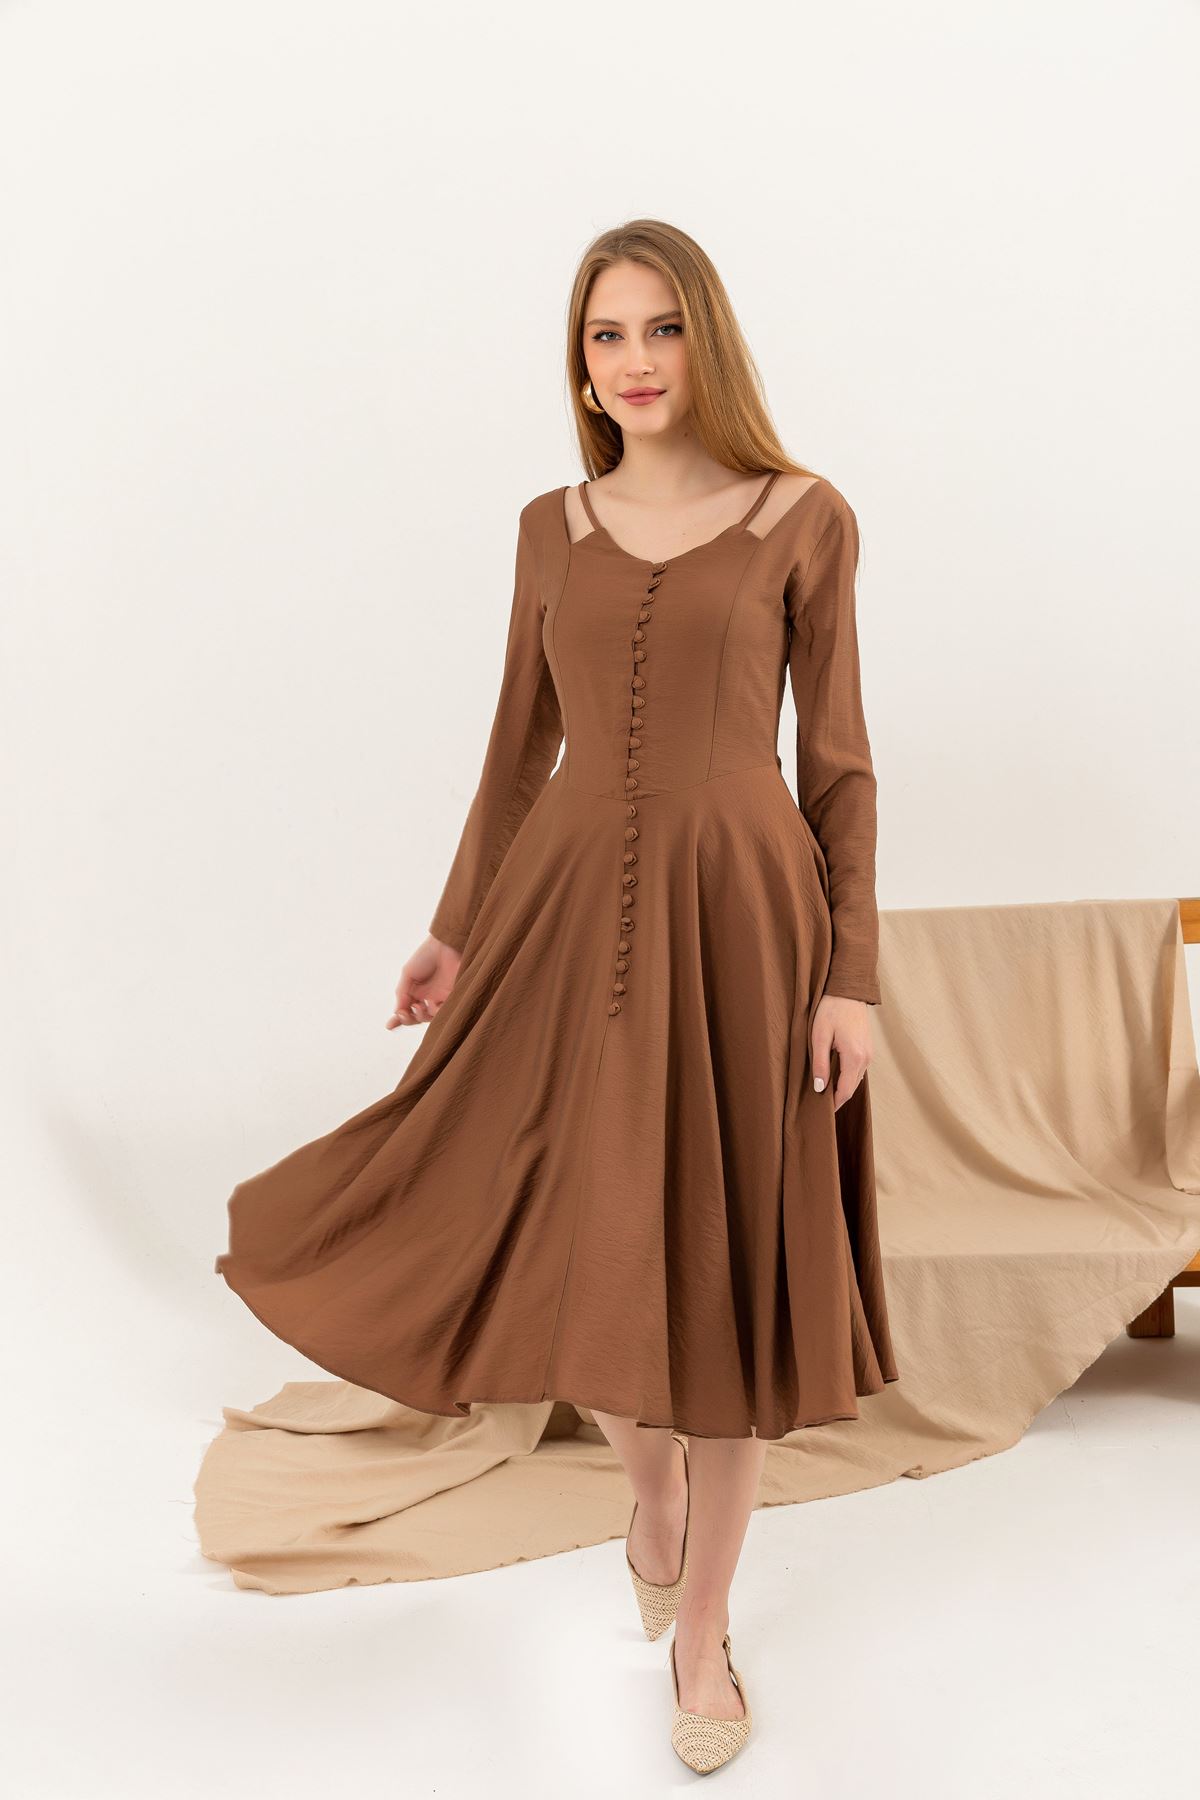 Chiffon Fabric Long Sleeve V-Neck Long Layer Women Dress-Brown